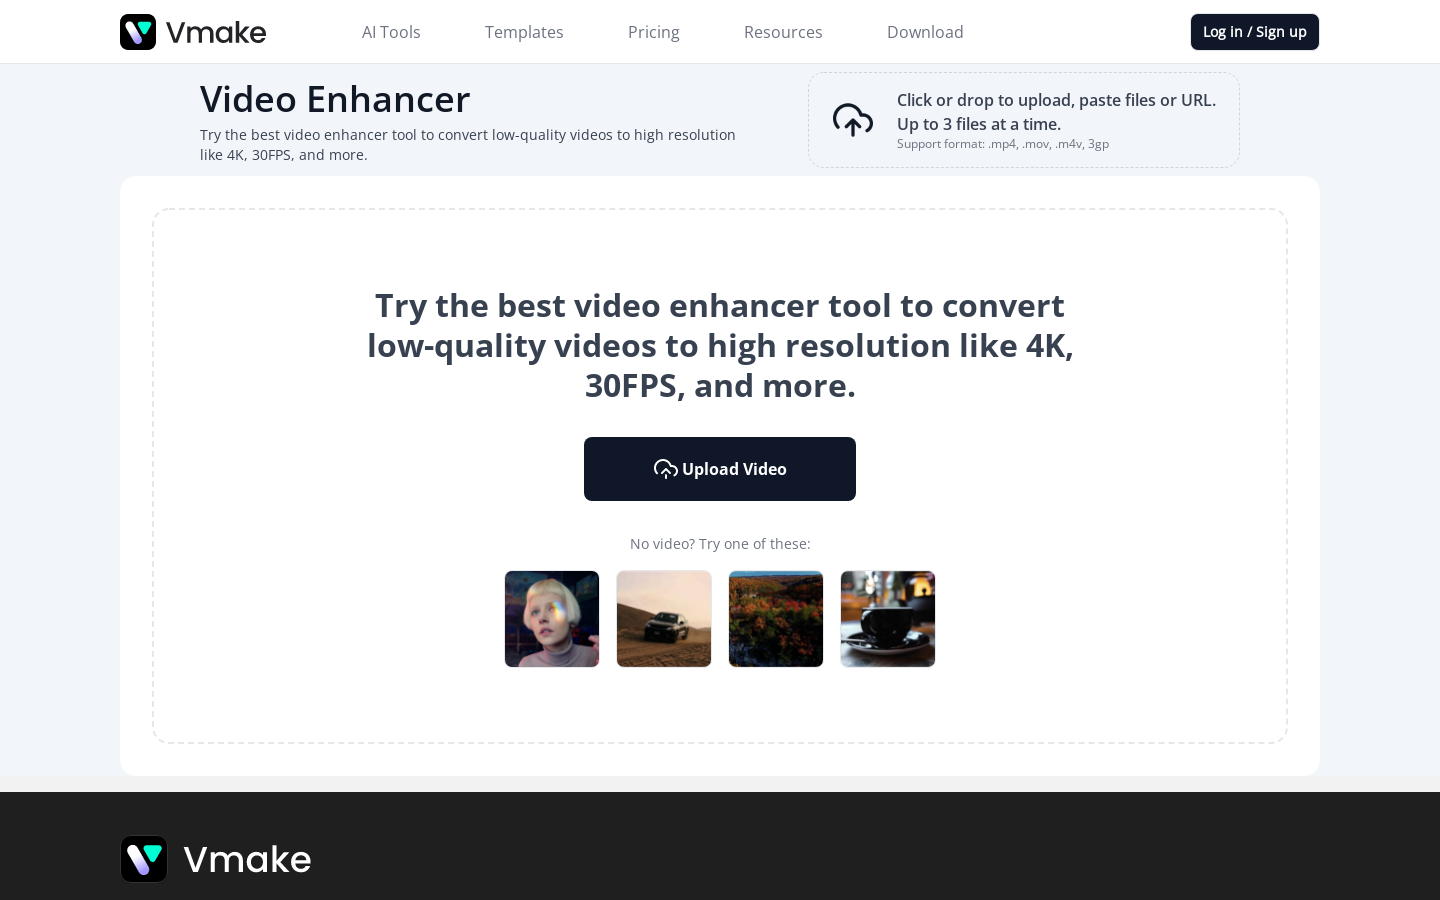 Video Enhancer - Vmake preview